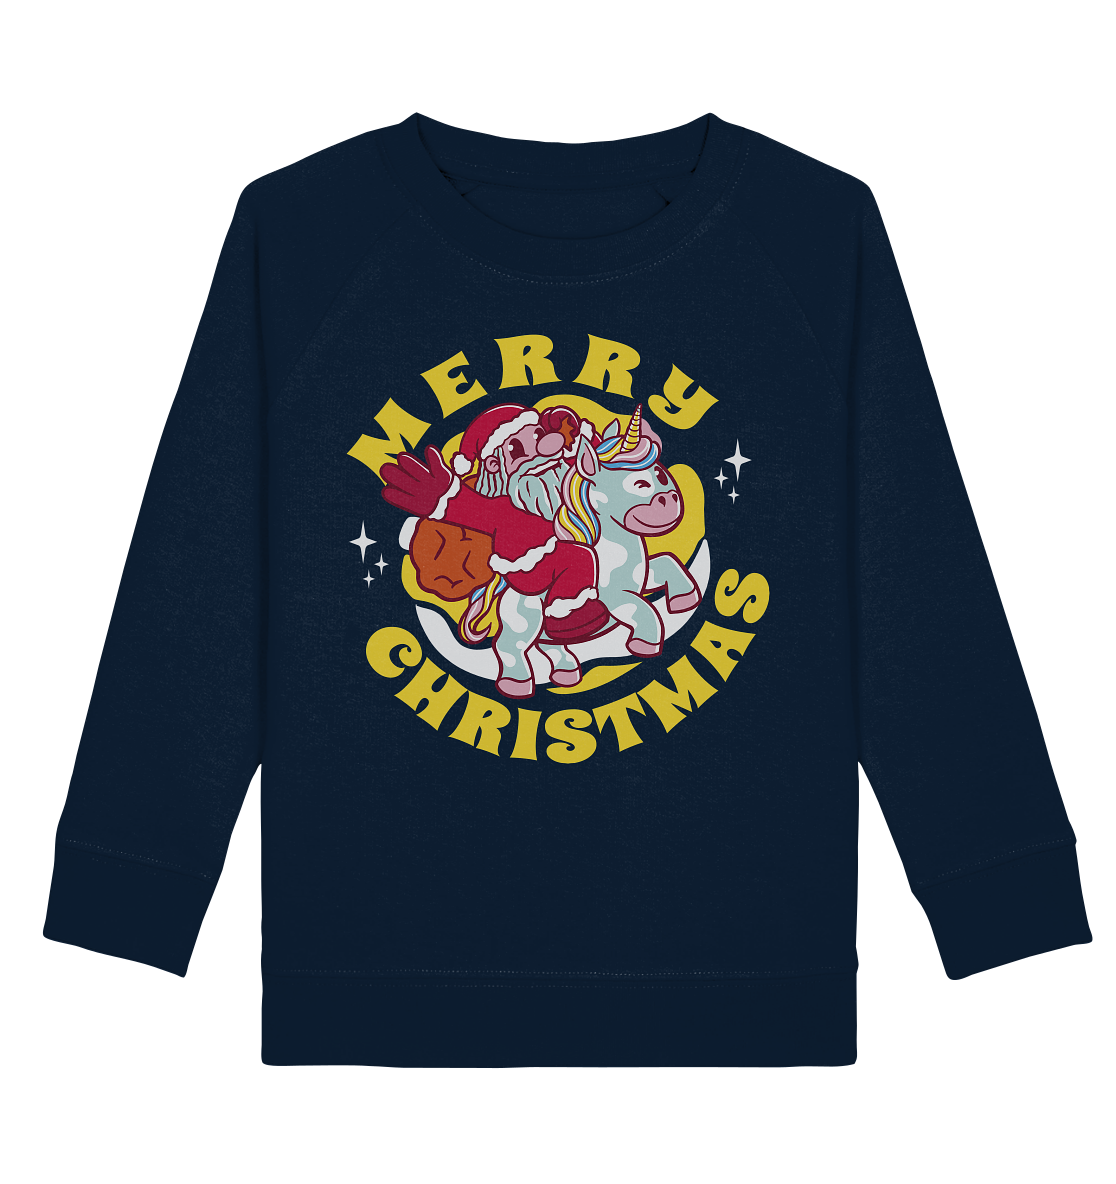 Reitender Nikolaus,Merry Christmas, Frohe Weihnachten  - Kids Organic Sweatshirt